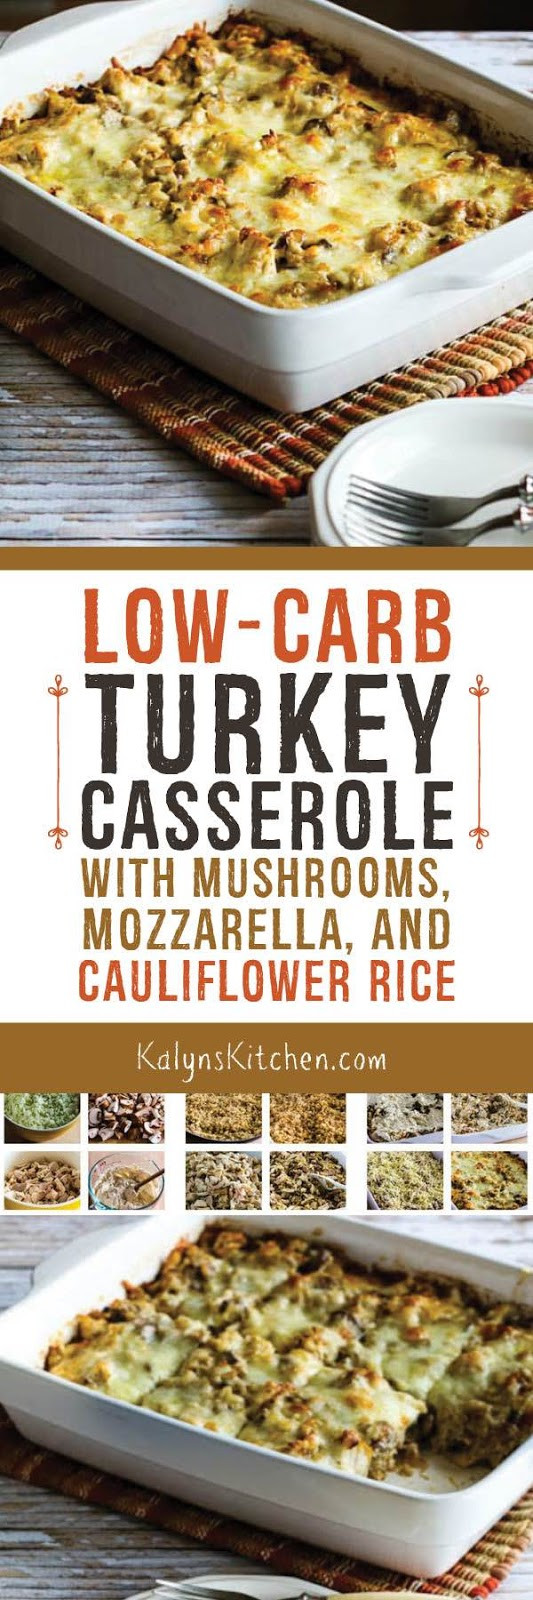 Low Carb Turkey Casserole
 Low Carb Turkey Casserole with Mushrooms Mozzarella and